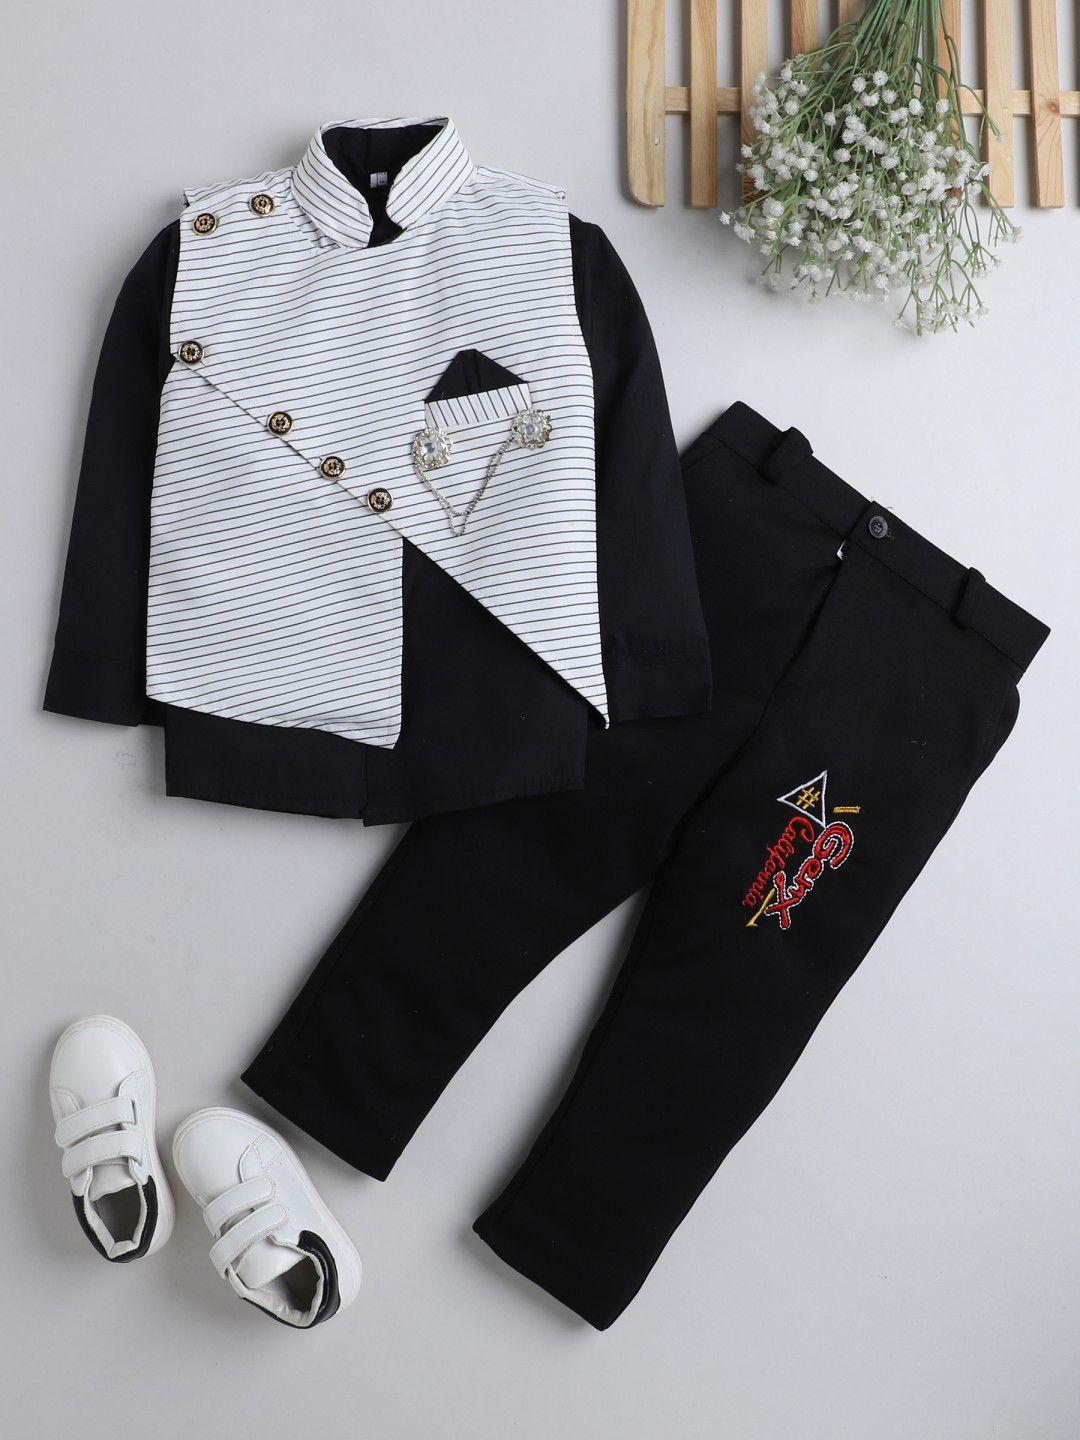 dkgf fashion boys white & black shirt with trousers